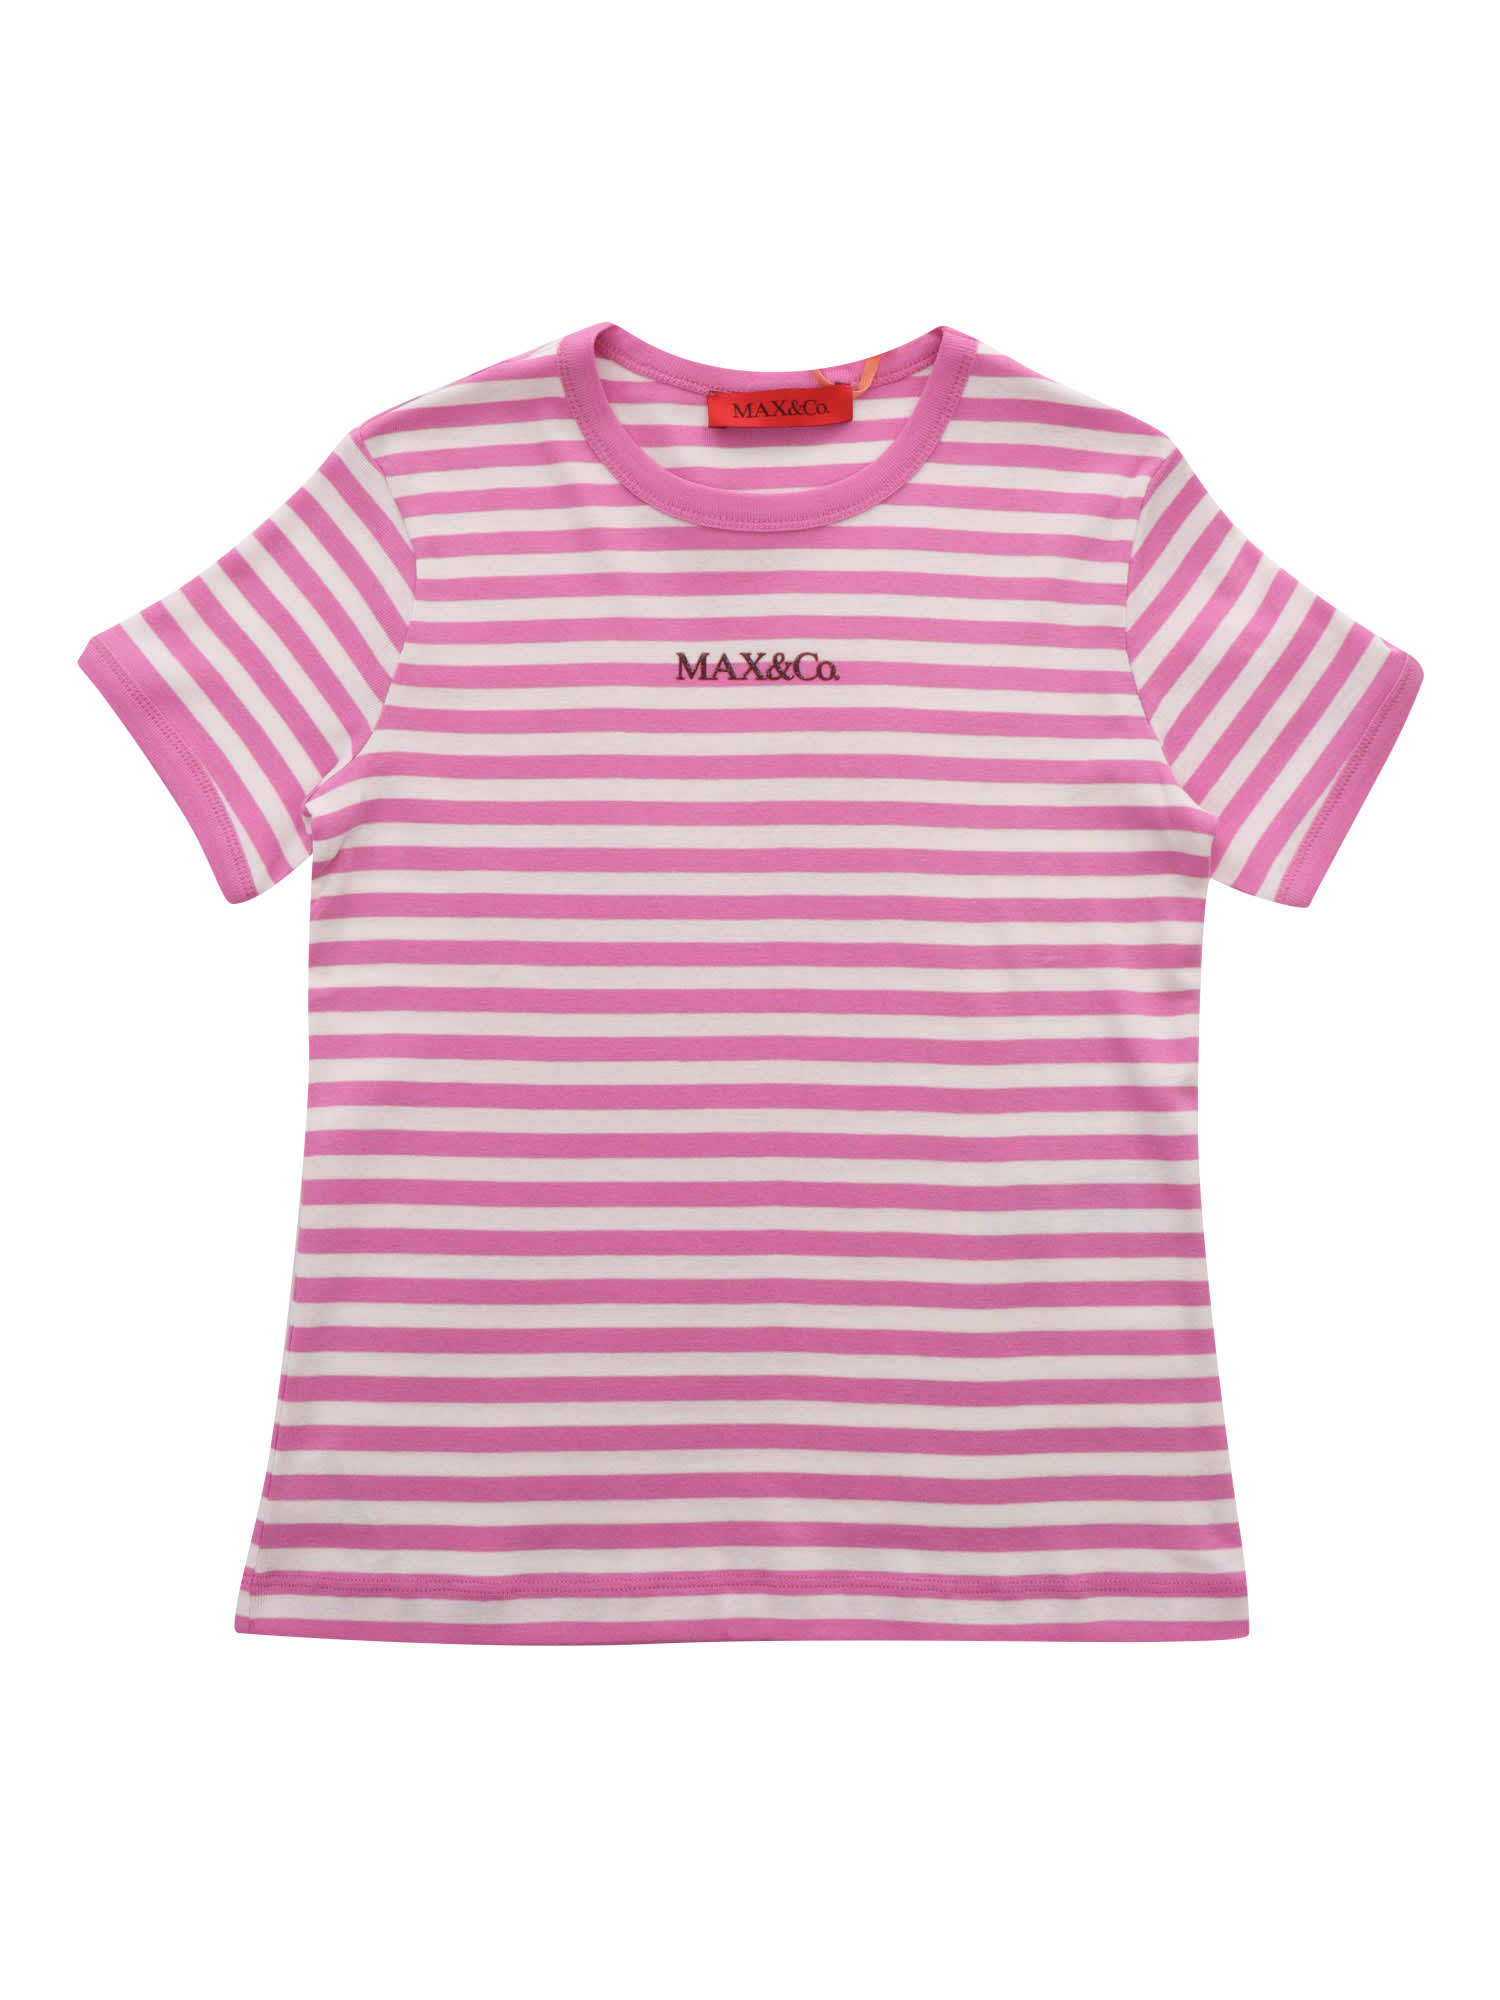 Max&amp;co. Kids' Pink Striped T-shirt